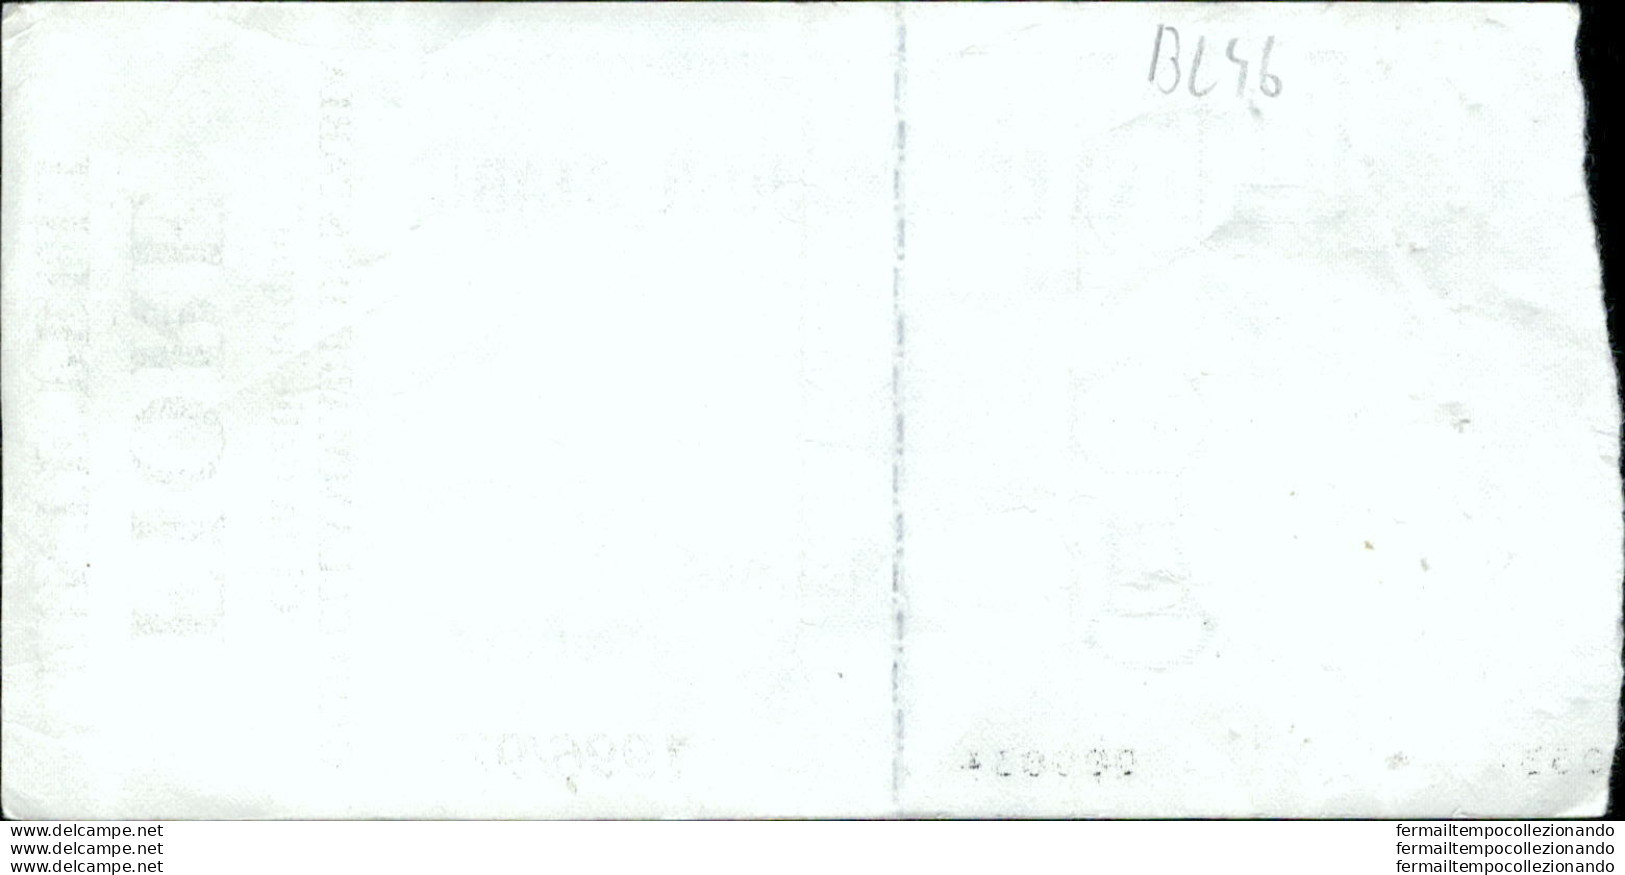 Bl46 Biglietto Calcio Ticket  Juve Stabia - Casarano 1996-97 - Toegangskaarten